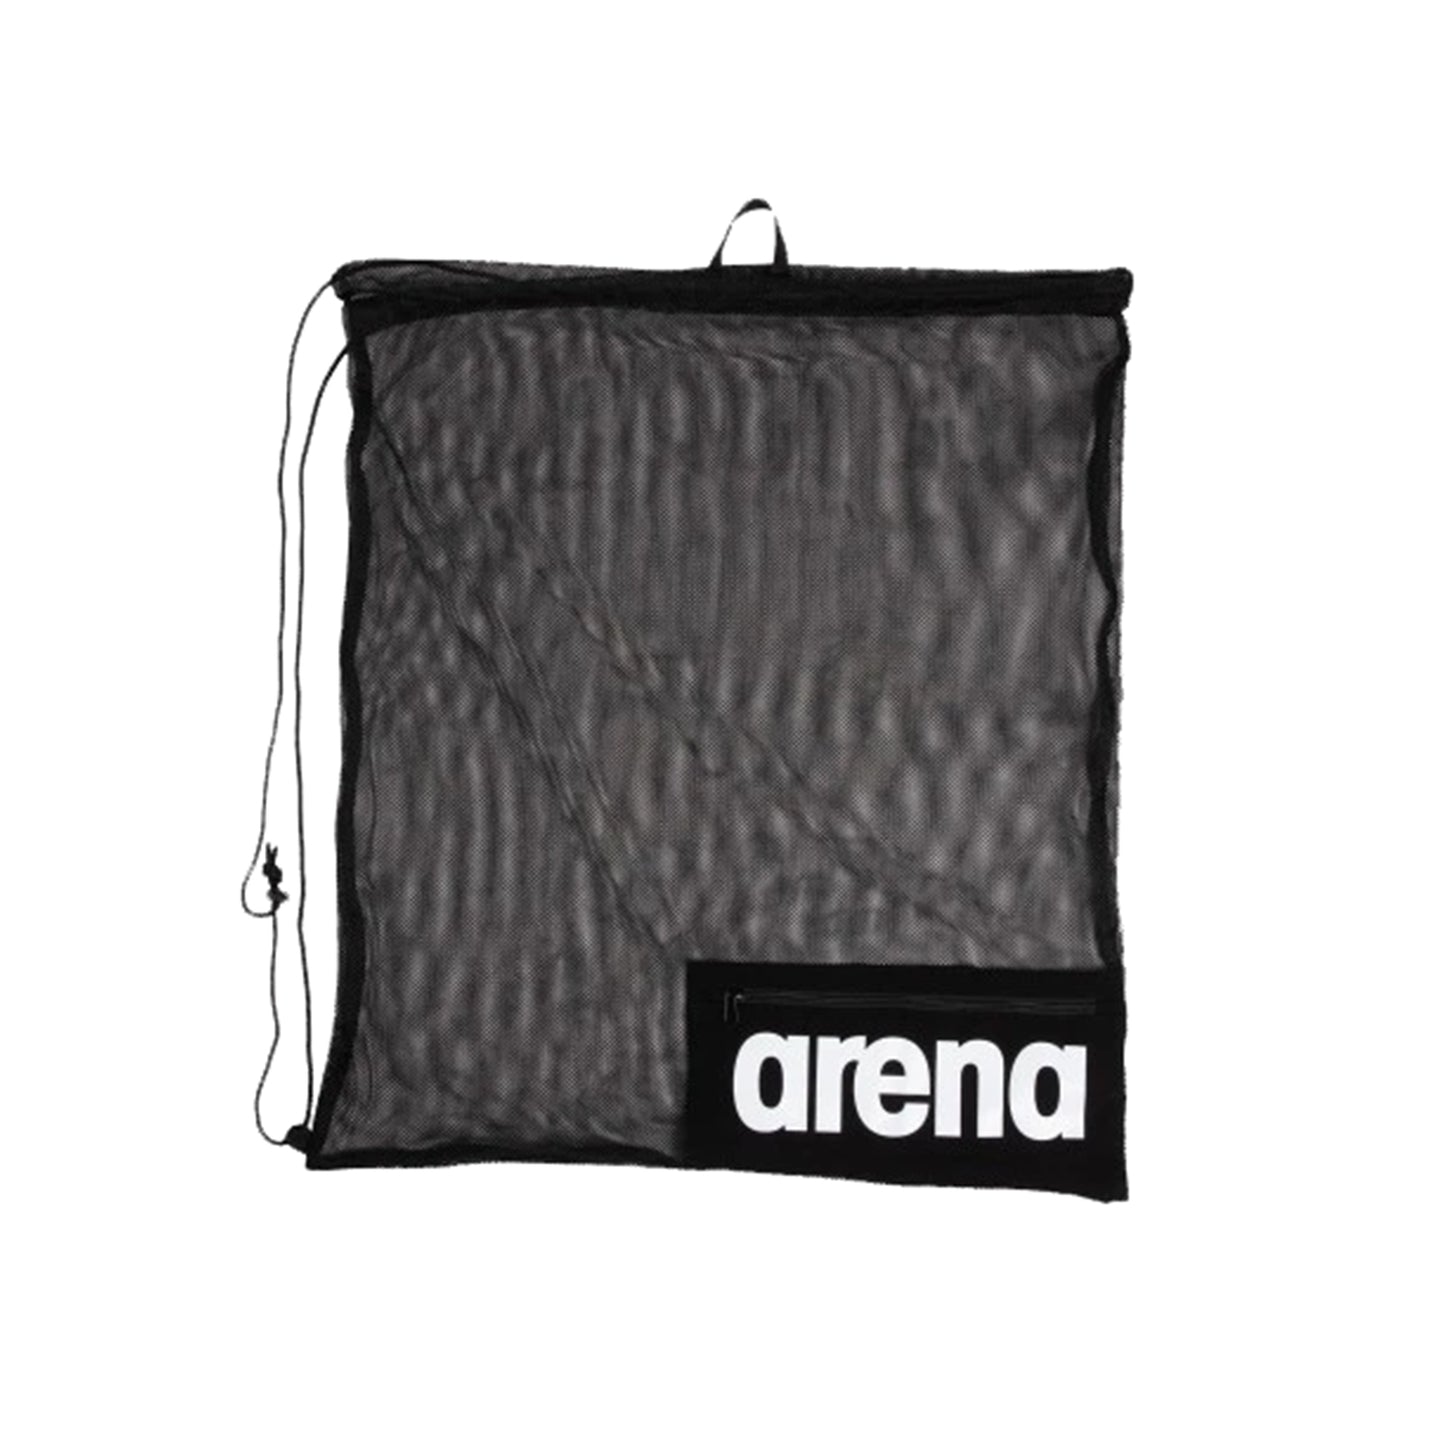 Arena XL Mesh Backpack - Assorted - Best Price online Prokicksports.com